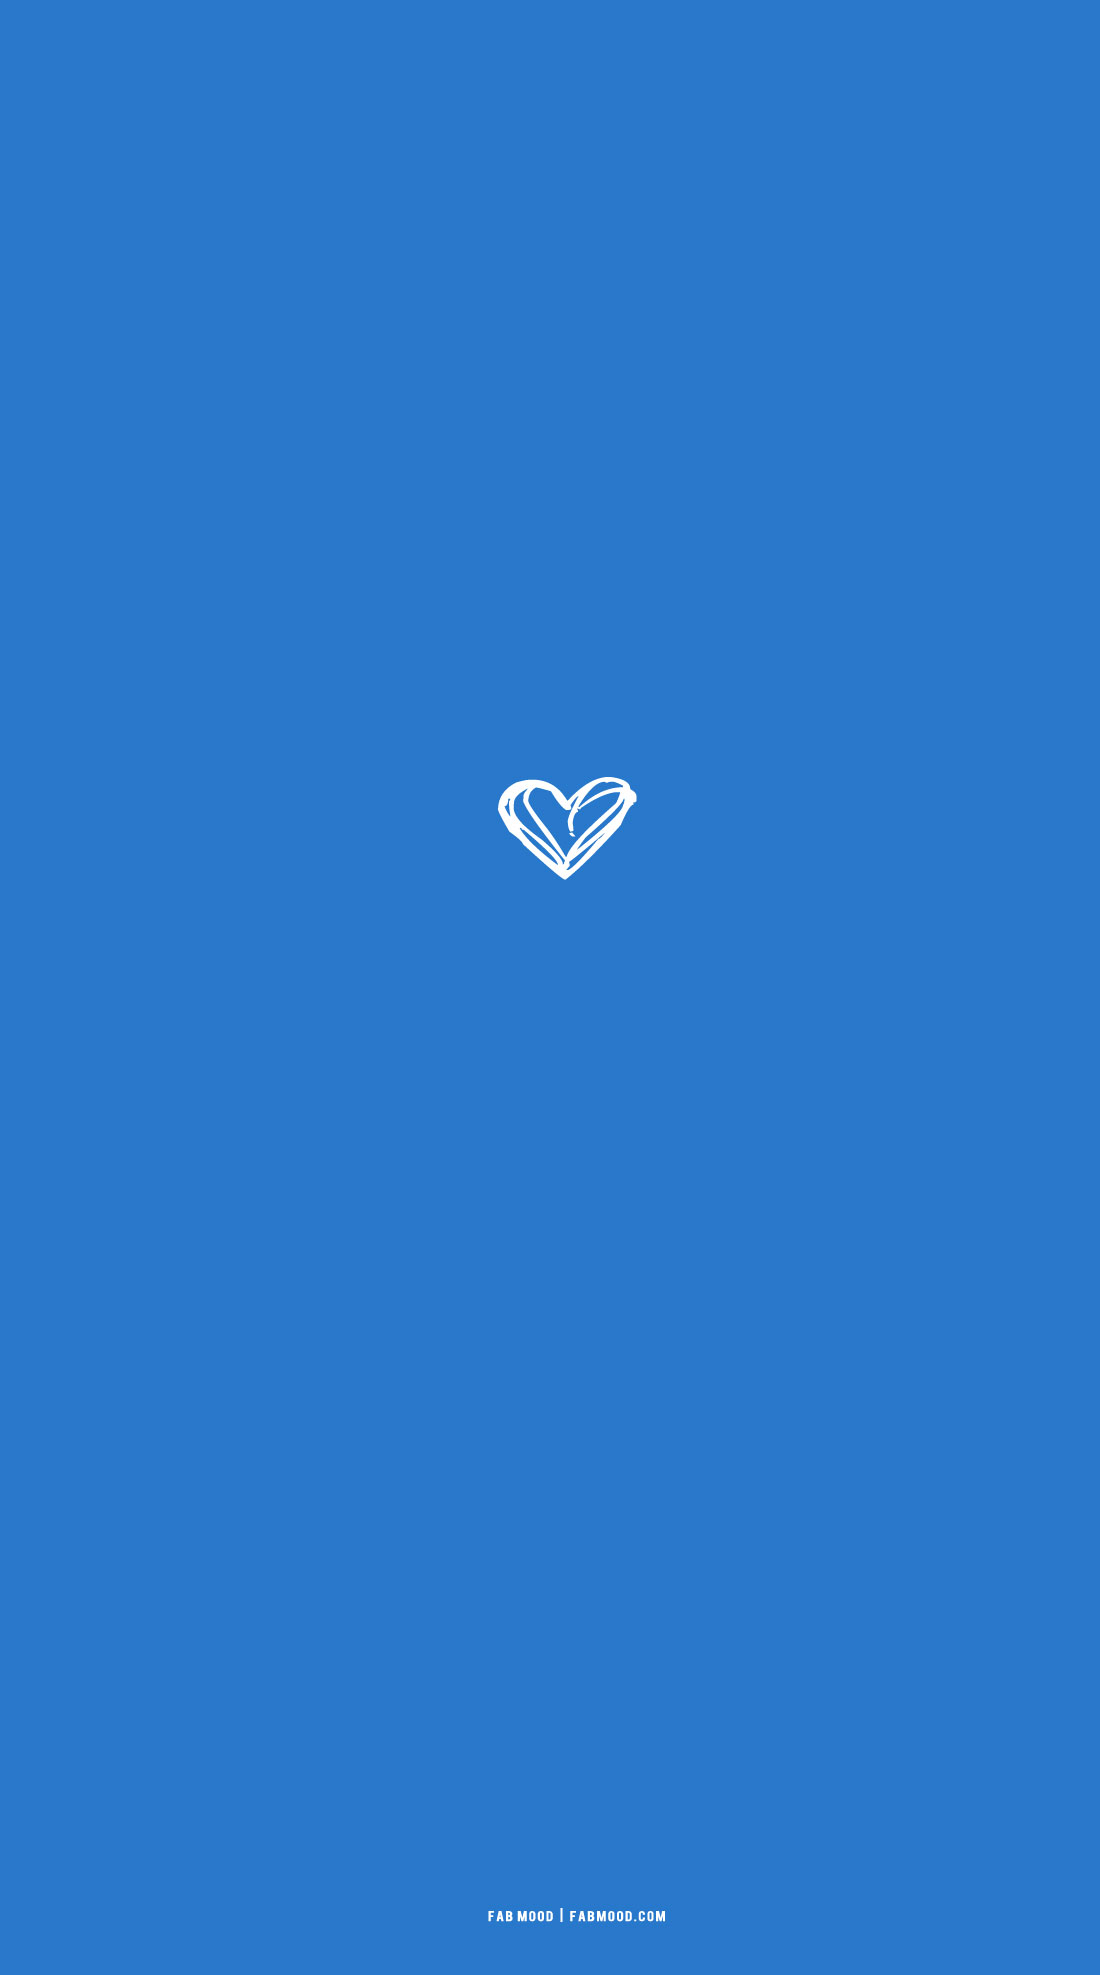 Background Blue Heart Wallpaper Discover more Aesthetic Beatiful Blue  Heart Glitter Love wallpape  Heart wallpaper Heart wallpaper hd Heart  iphone wallpaper